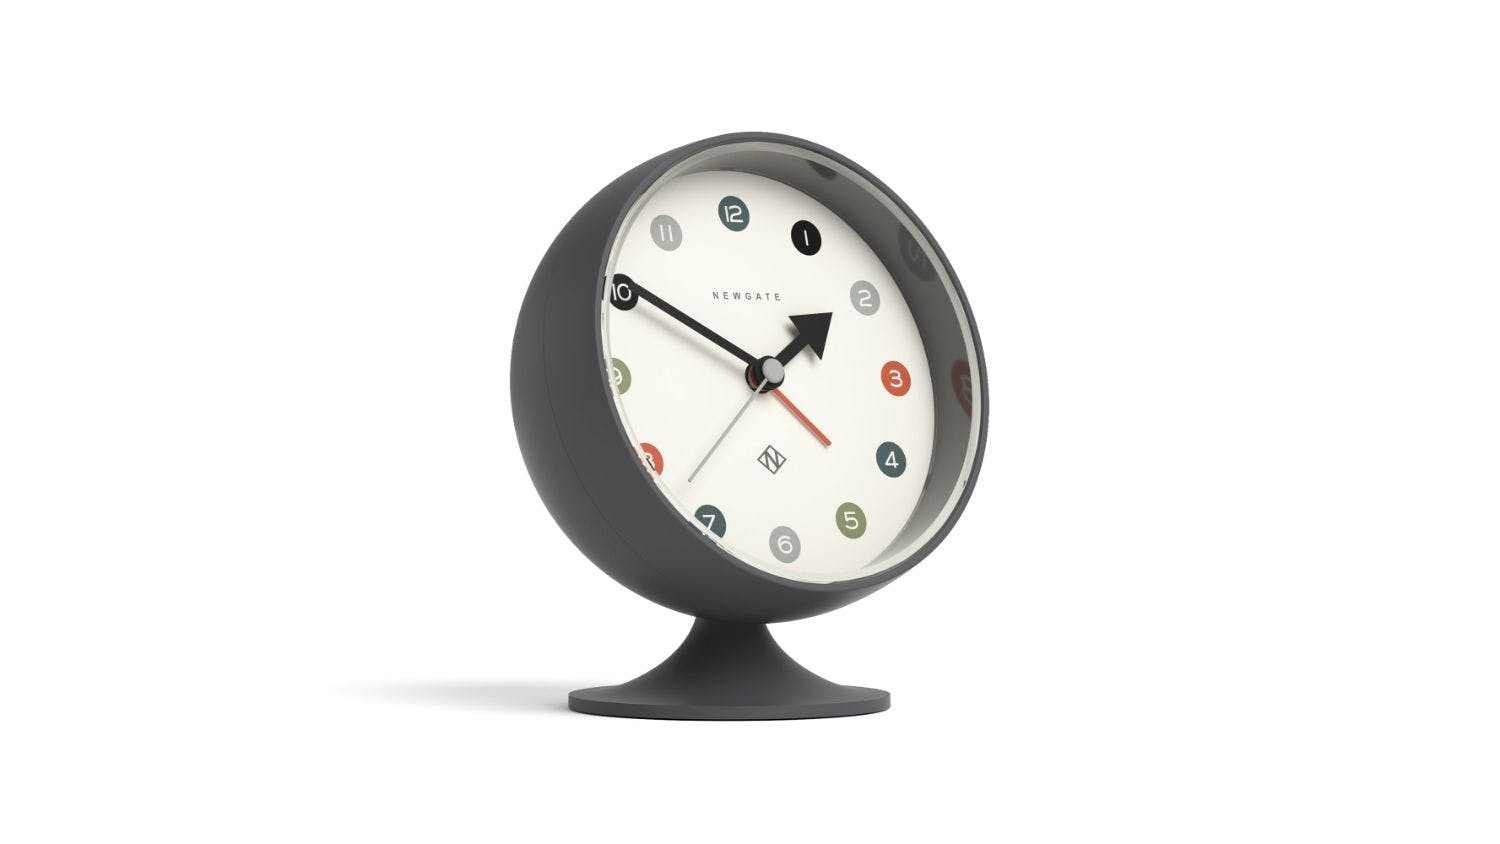 Newgate "Spheric" Alarm Clock - Blizzard Grey